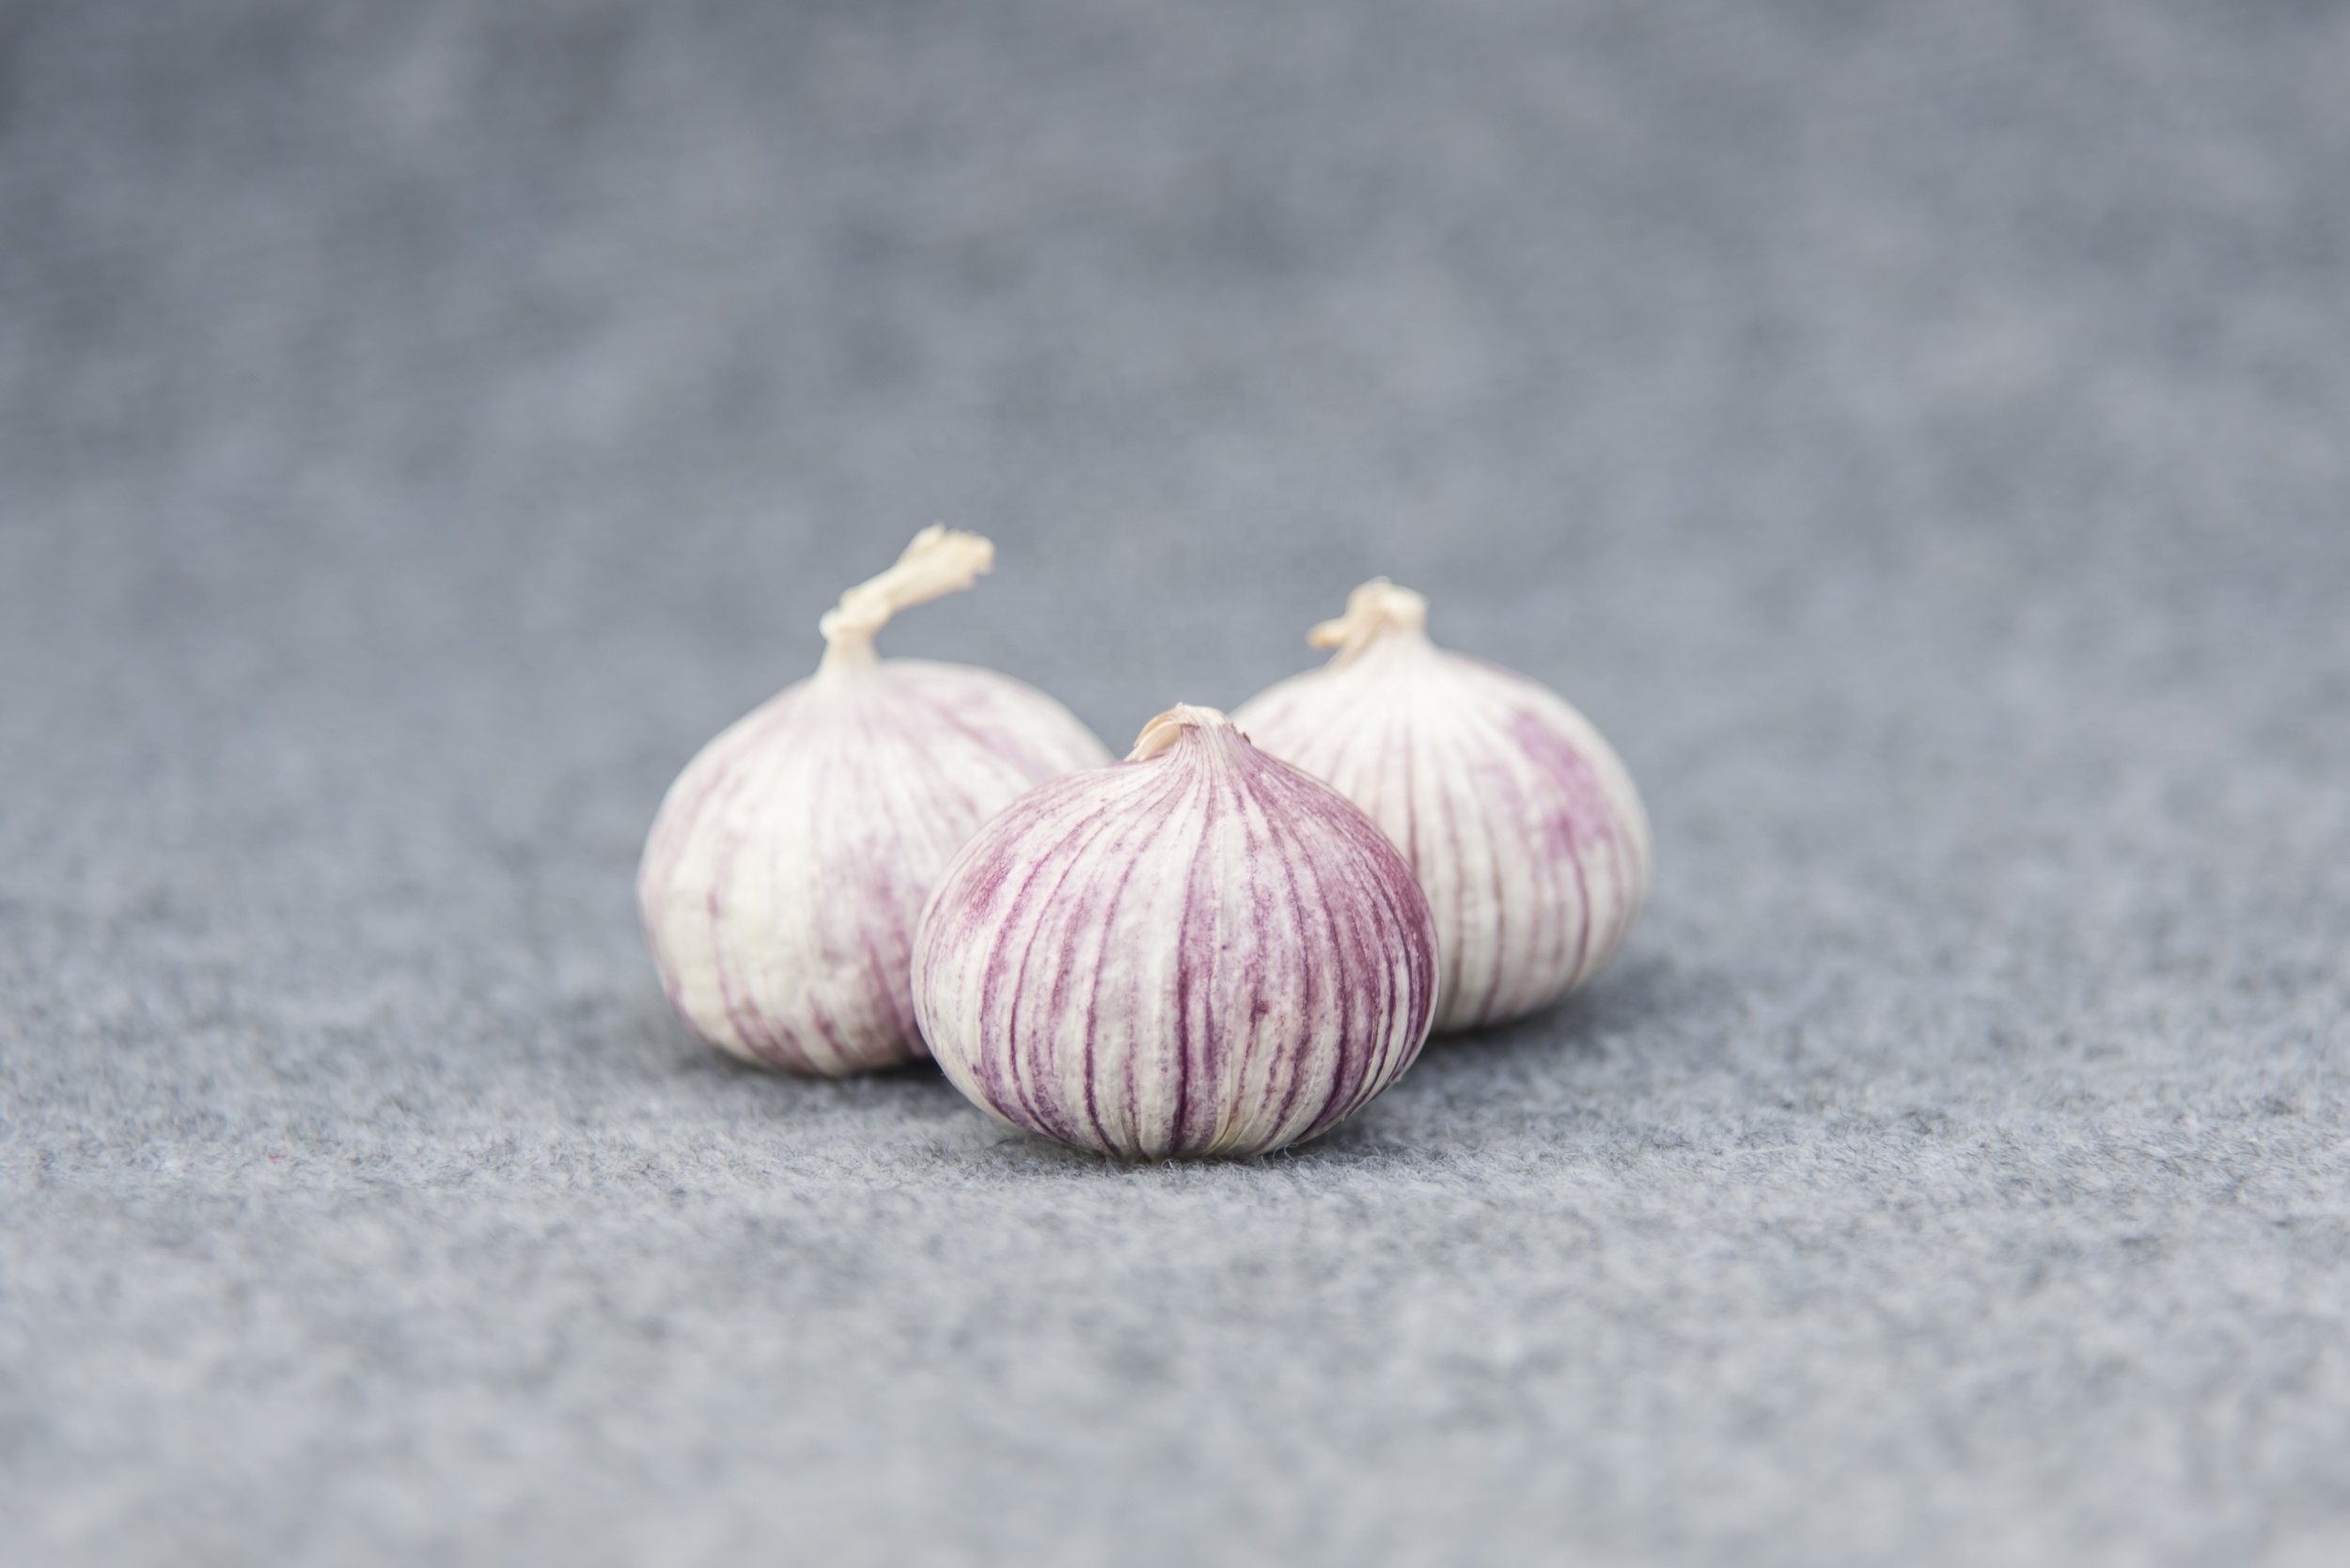 High quality fresh single clove garlic